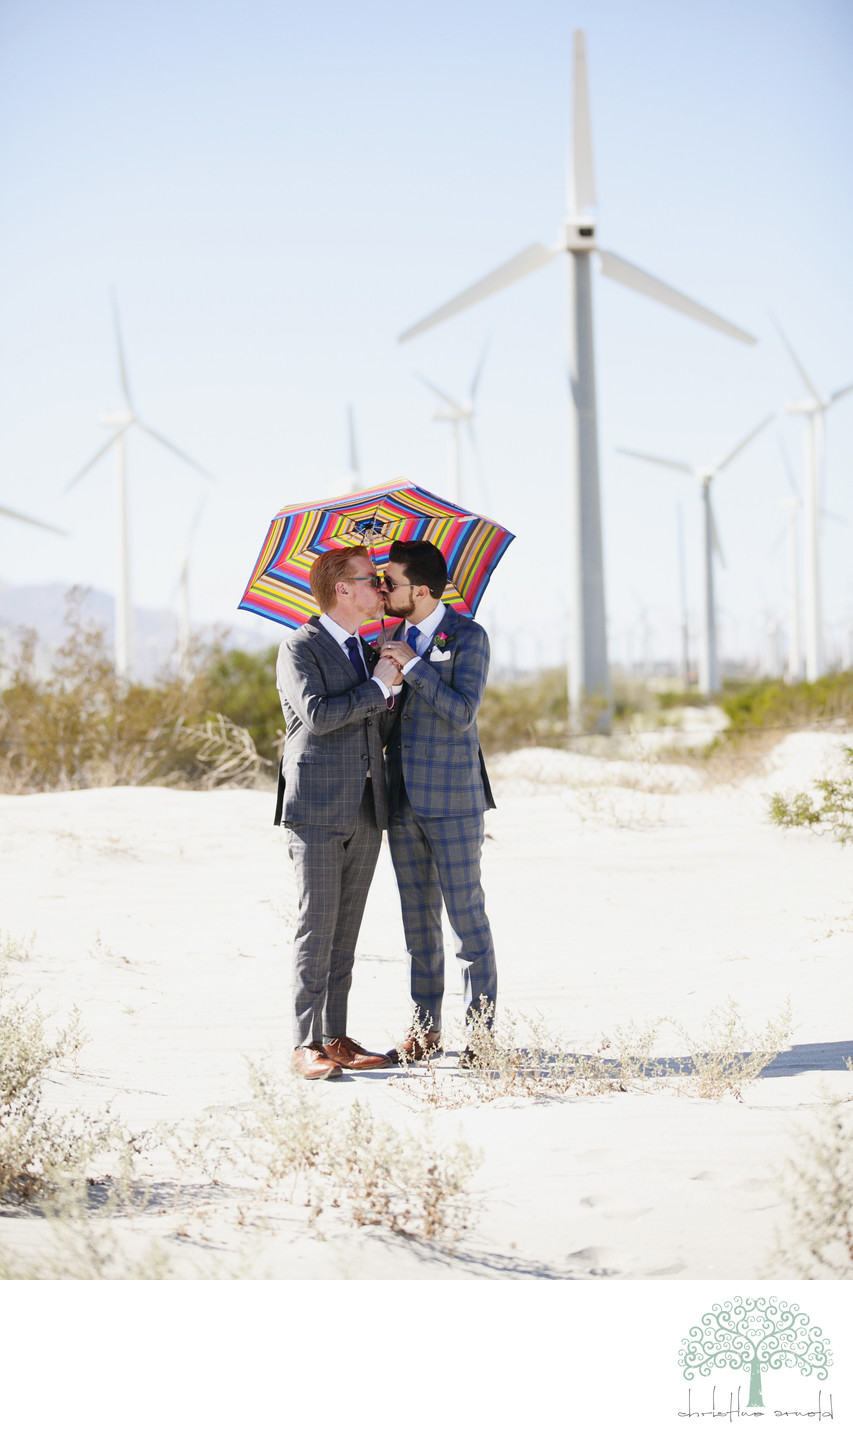 Best LGBTQ wedding photos at Palm Springs windmills